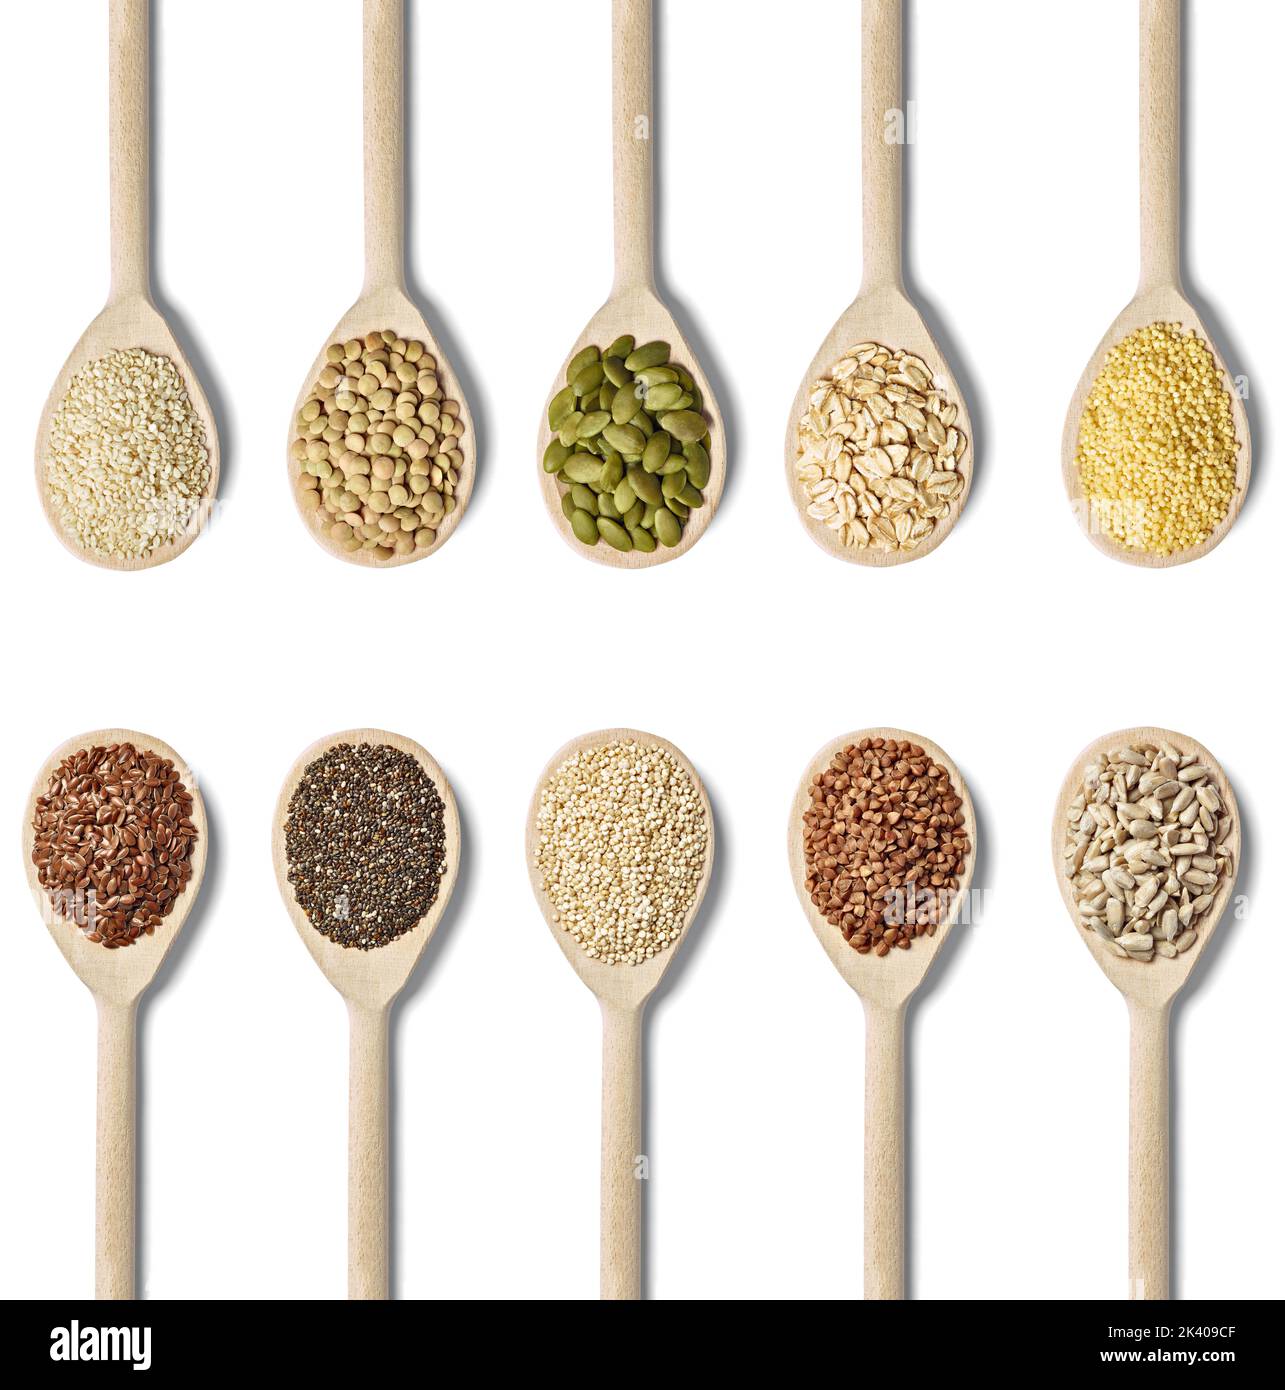 ingredient food spoon cooking kitchen organic vegetable powder seed cuisine bean chia quinoa powder rice Stock Photo